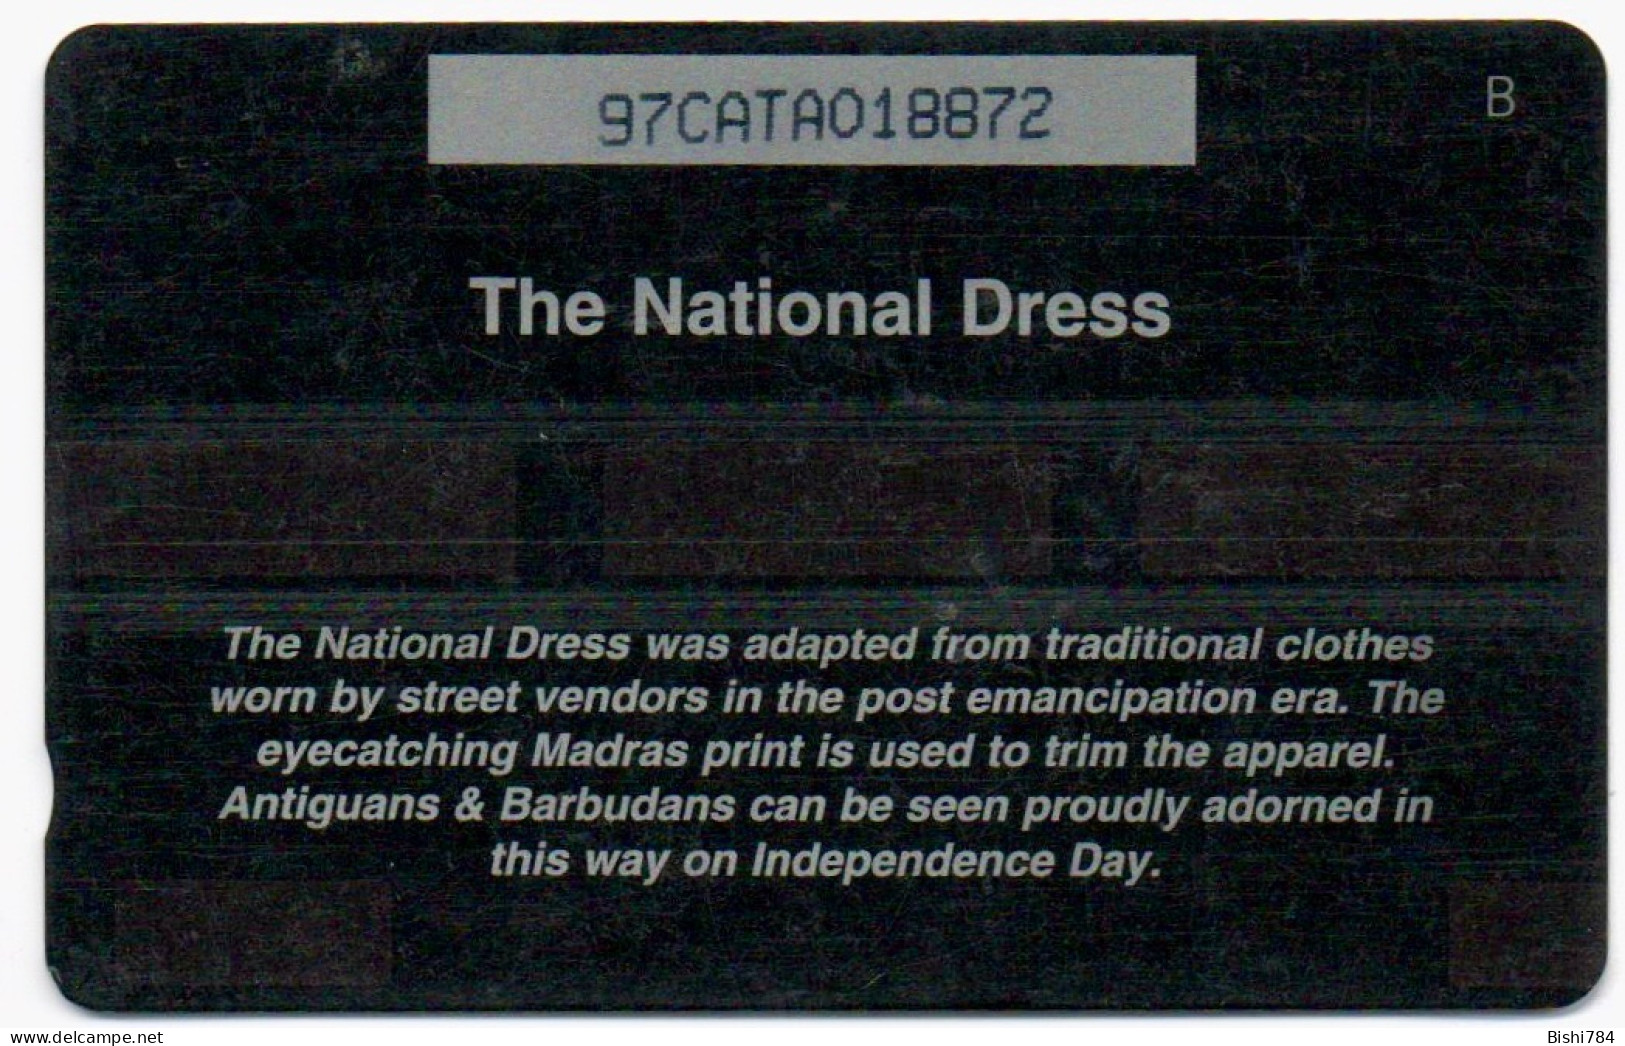 Antigua & Barbuda - The National Dress - 97CATA (regualr 0) - Antigua Y Barbuda